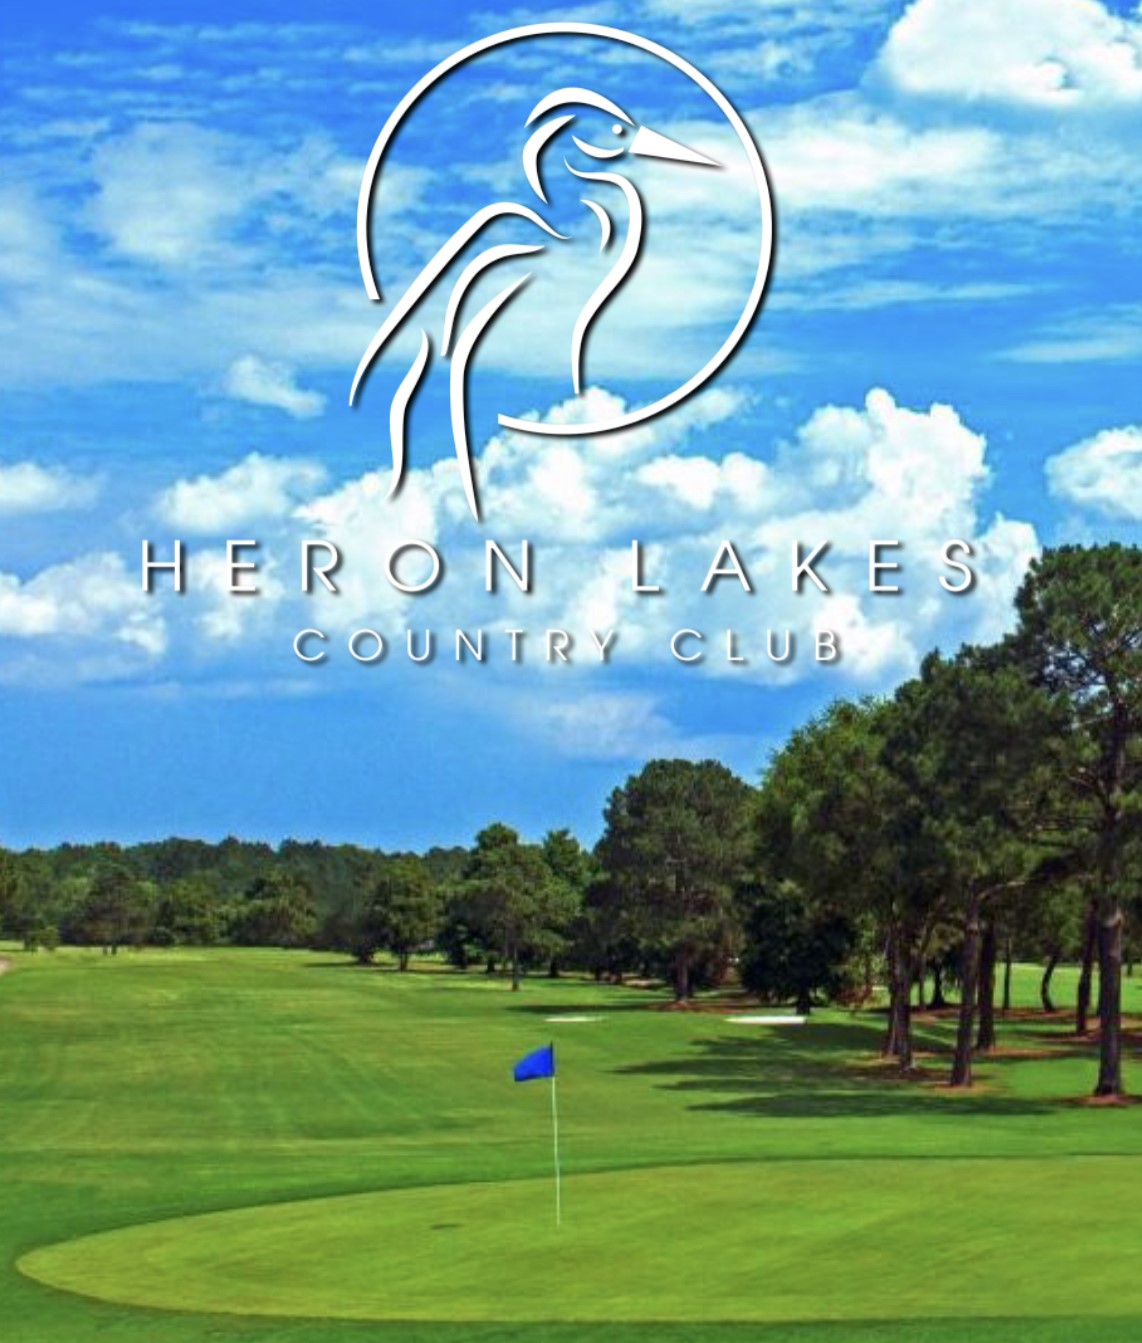 Heron Lakes Country Club